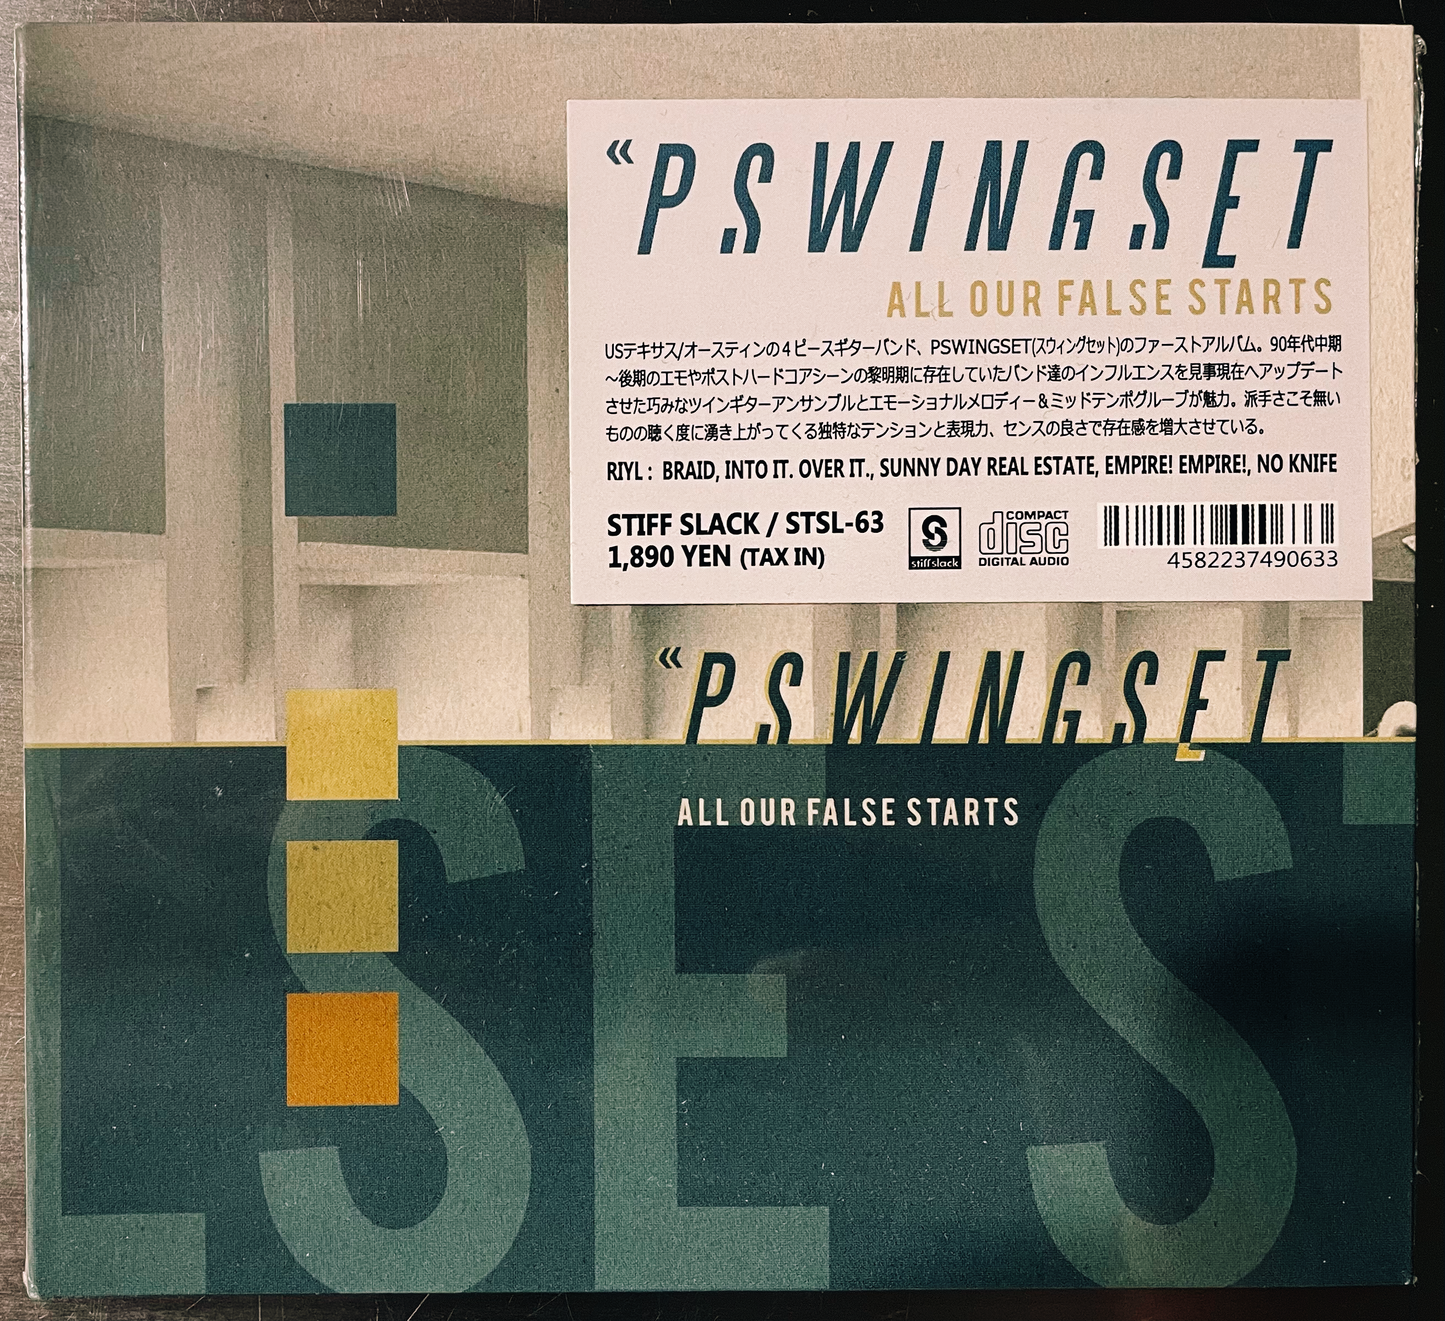 Pswingset - All Our False Starts (Japanese Import CD)